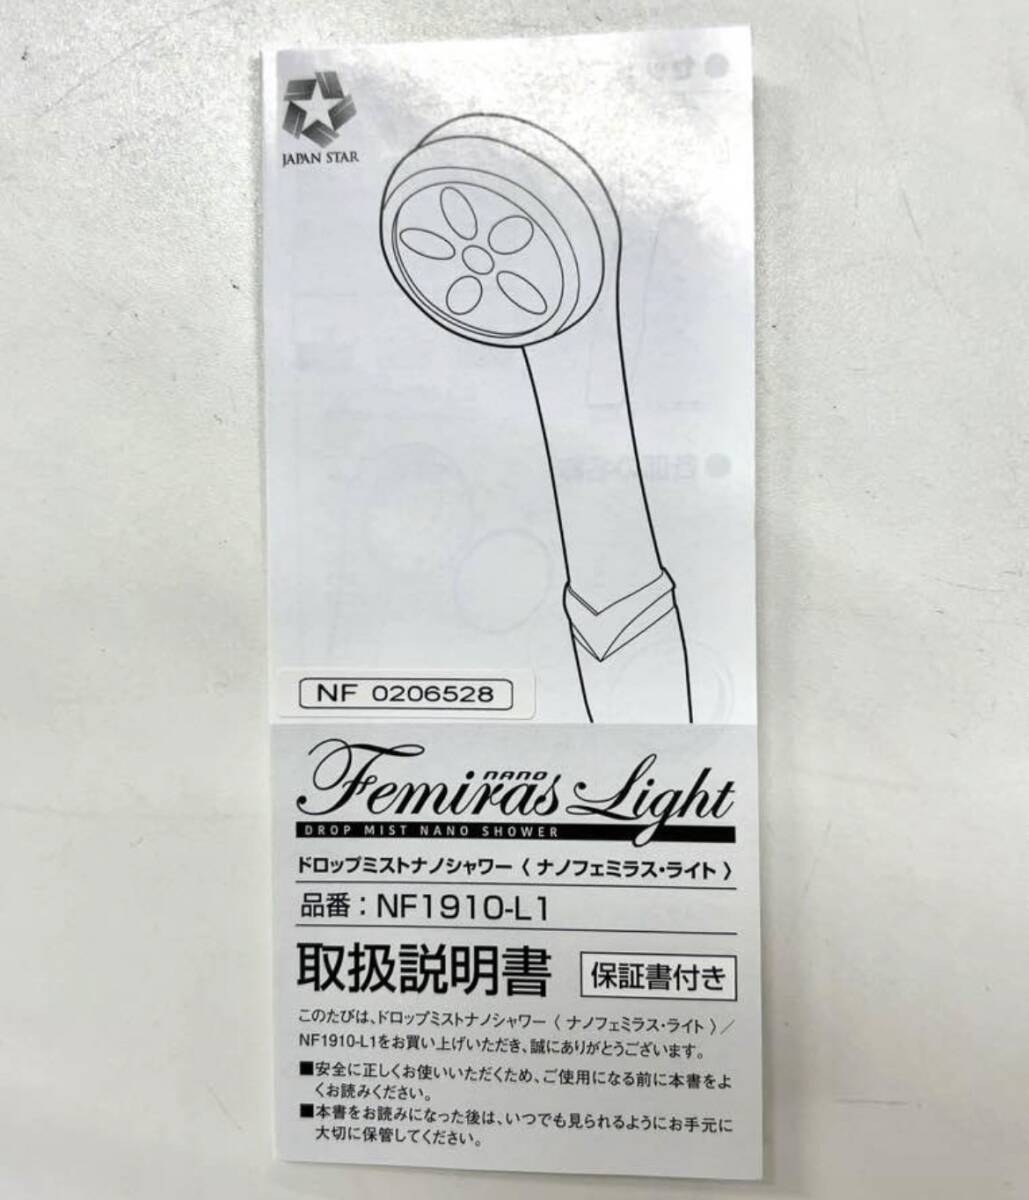 P175-W11-648 new goods unused JAPAN STAR Japan Star nano fe Mira s* light NF1910-L1 shower head box attaching ③